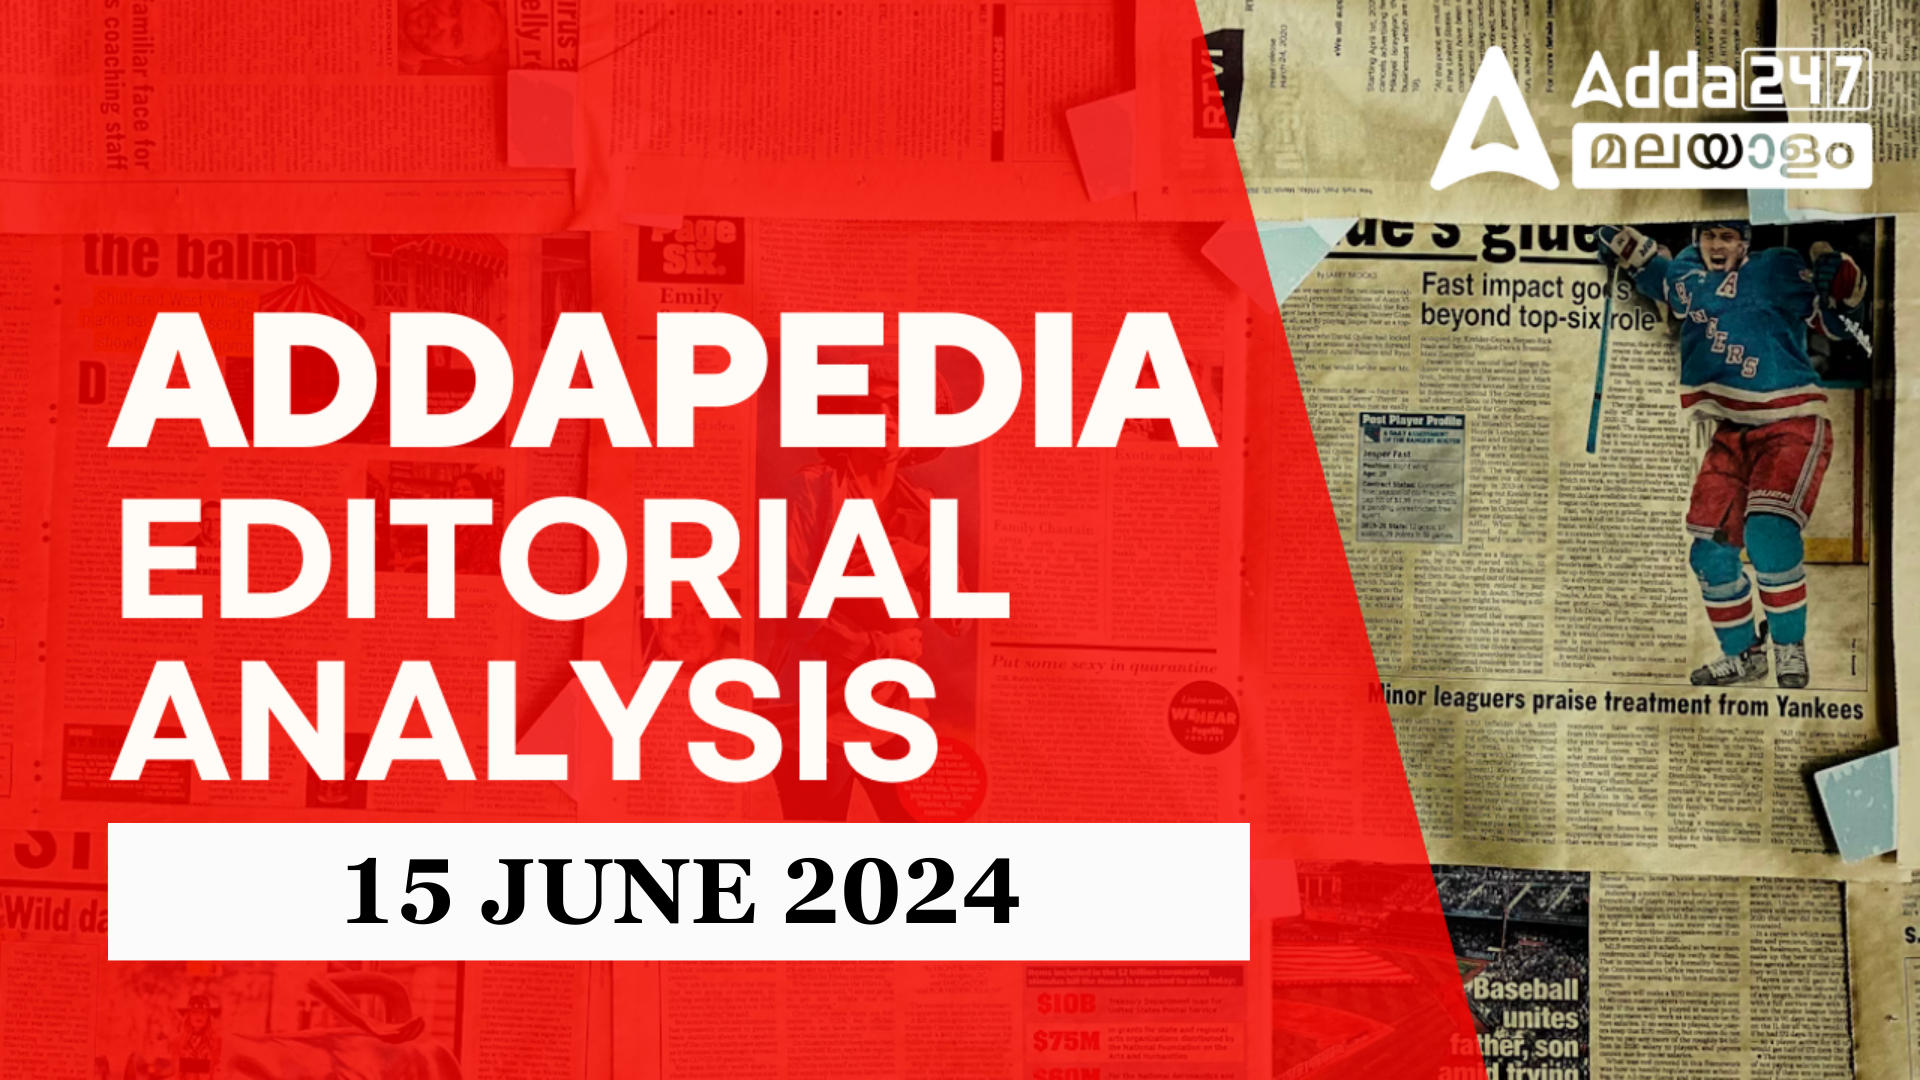 Addapedia Editorial Analysis: Daily News Editorial PDF, 15 June 2024